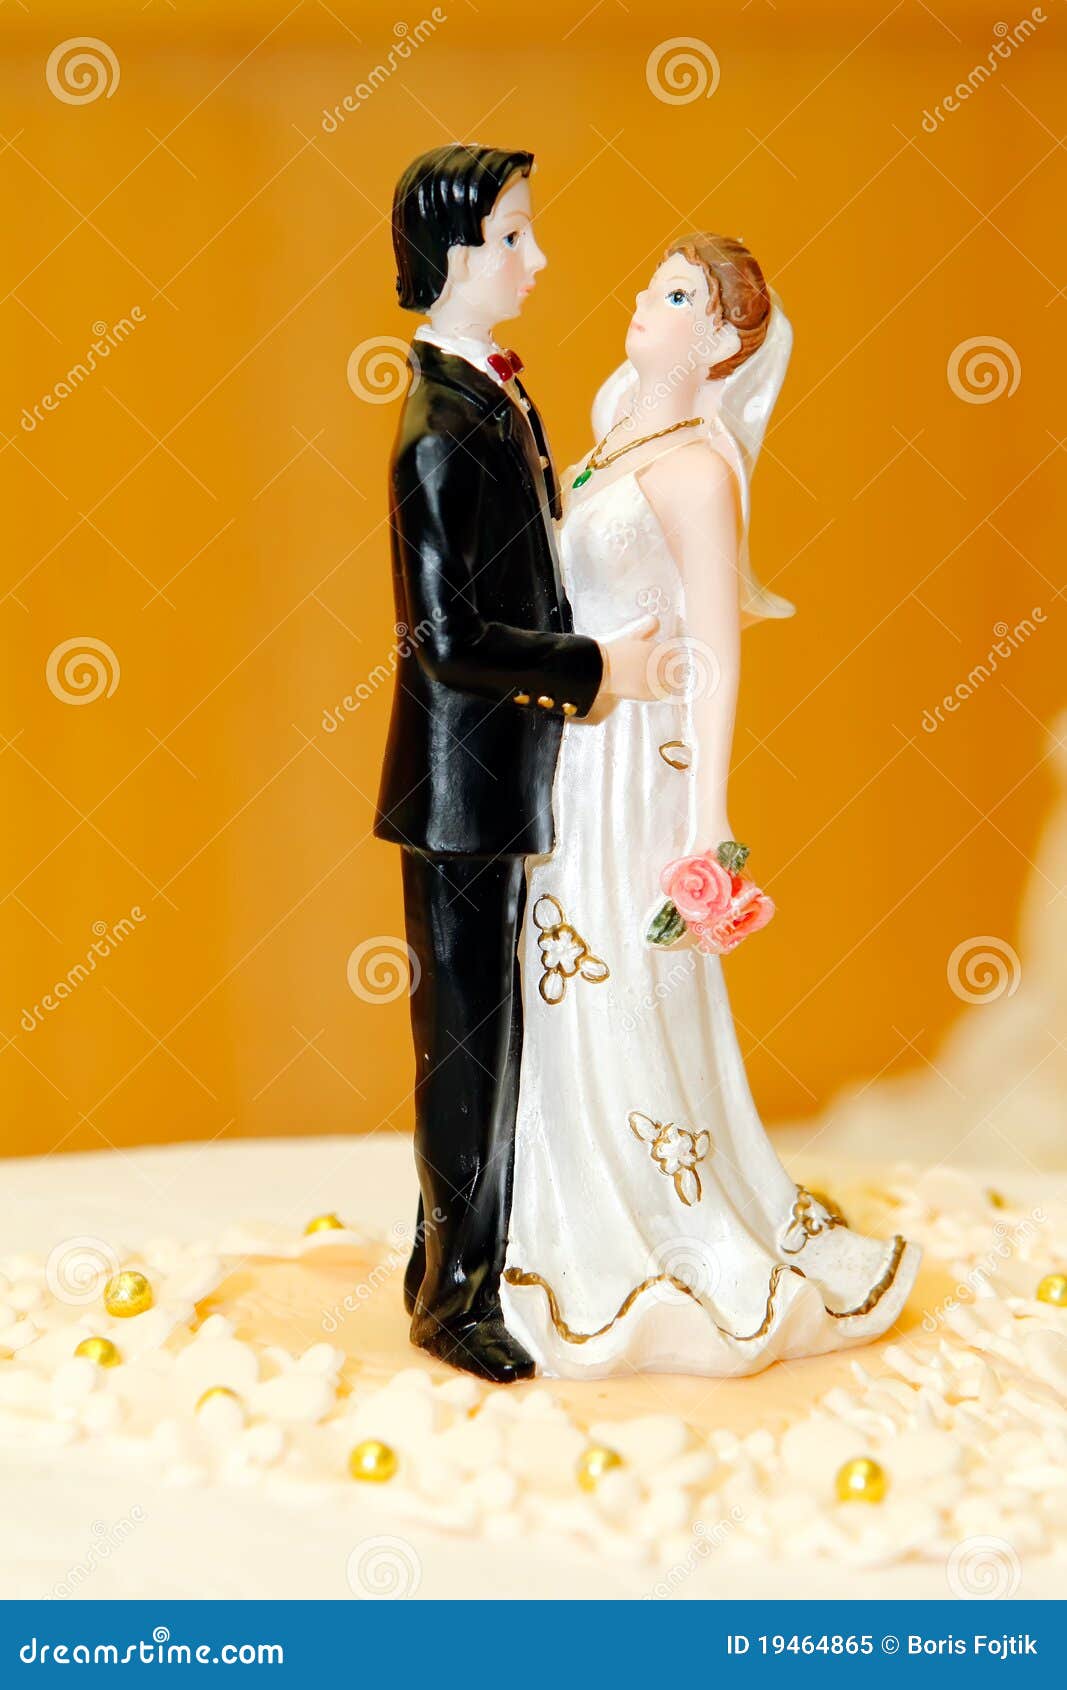 bride and groom wedding cake decoration